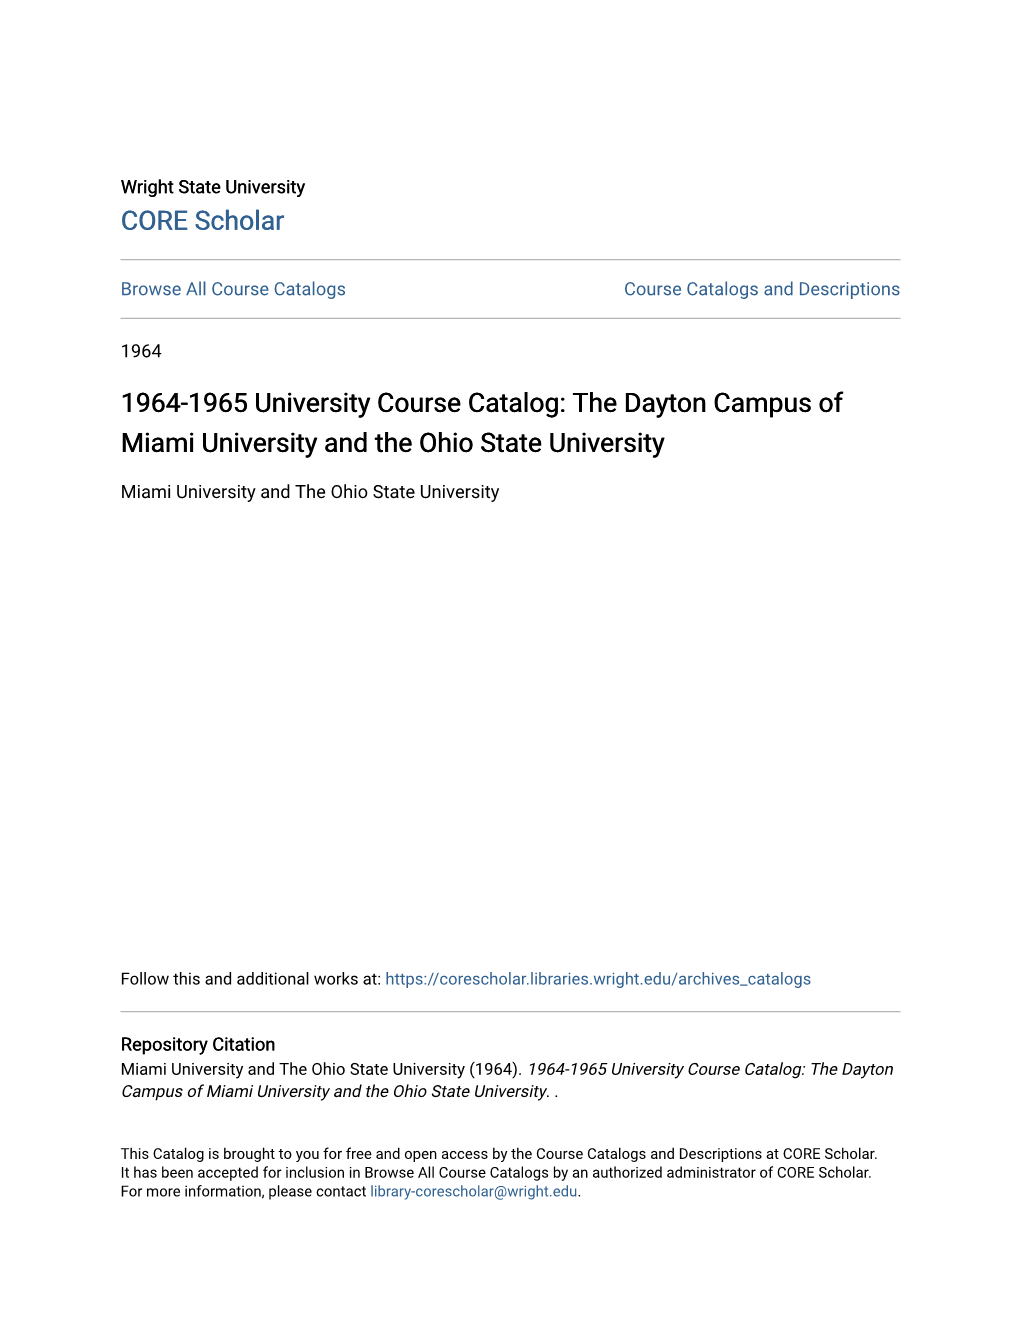 1964-1965 University Course Catalog: the Dayton Campus of Miami University and the Ohio State University